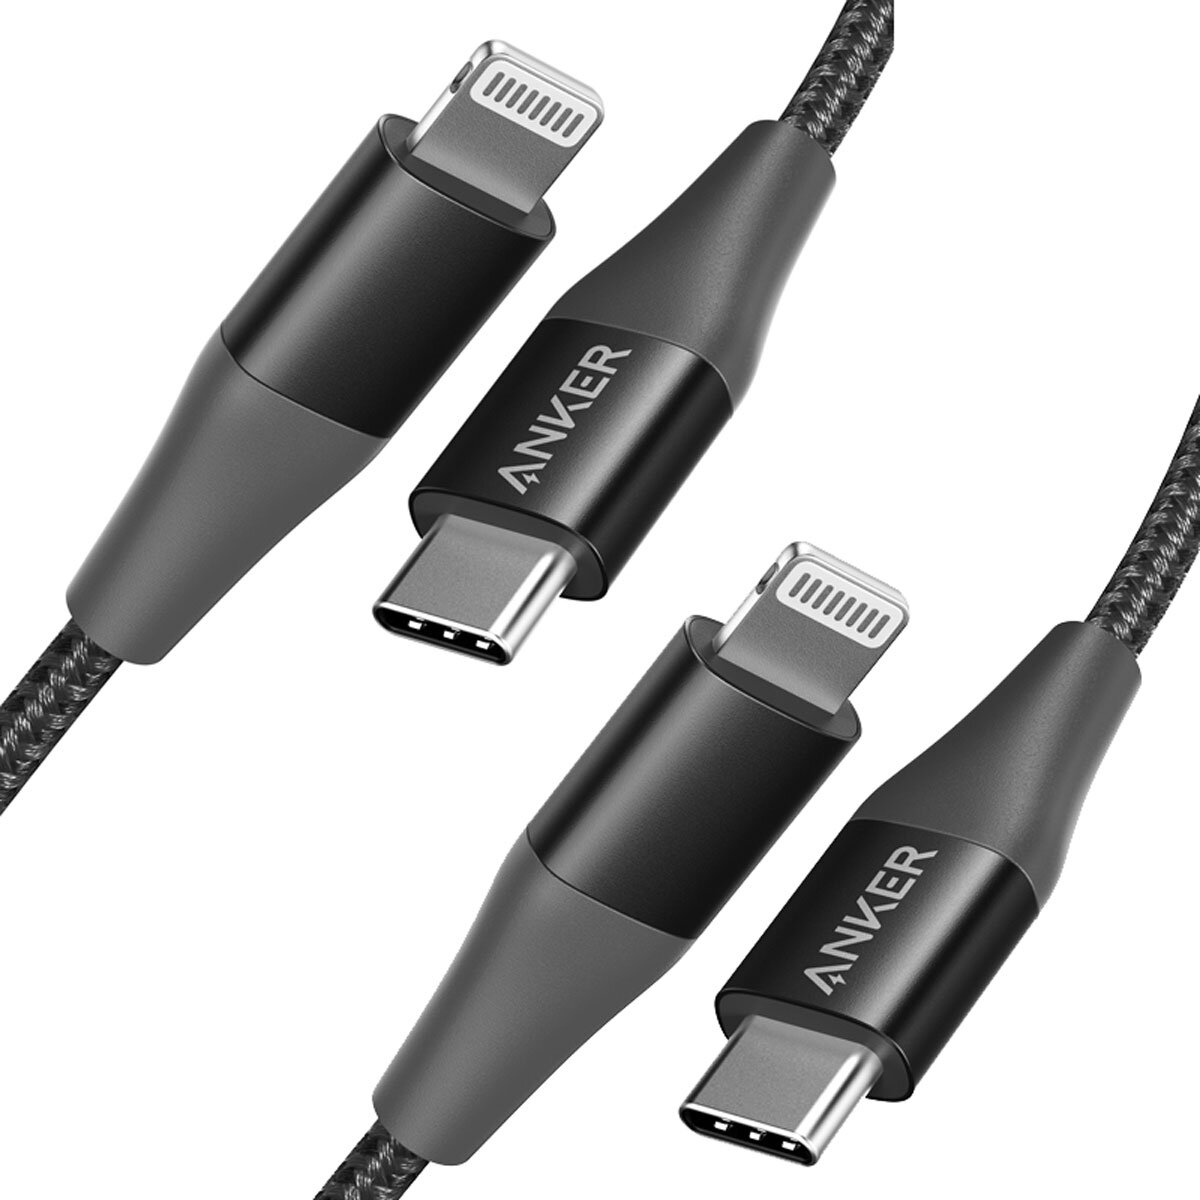 USB-C to Lightning Cable (1m) - Apple (UK)